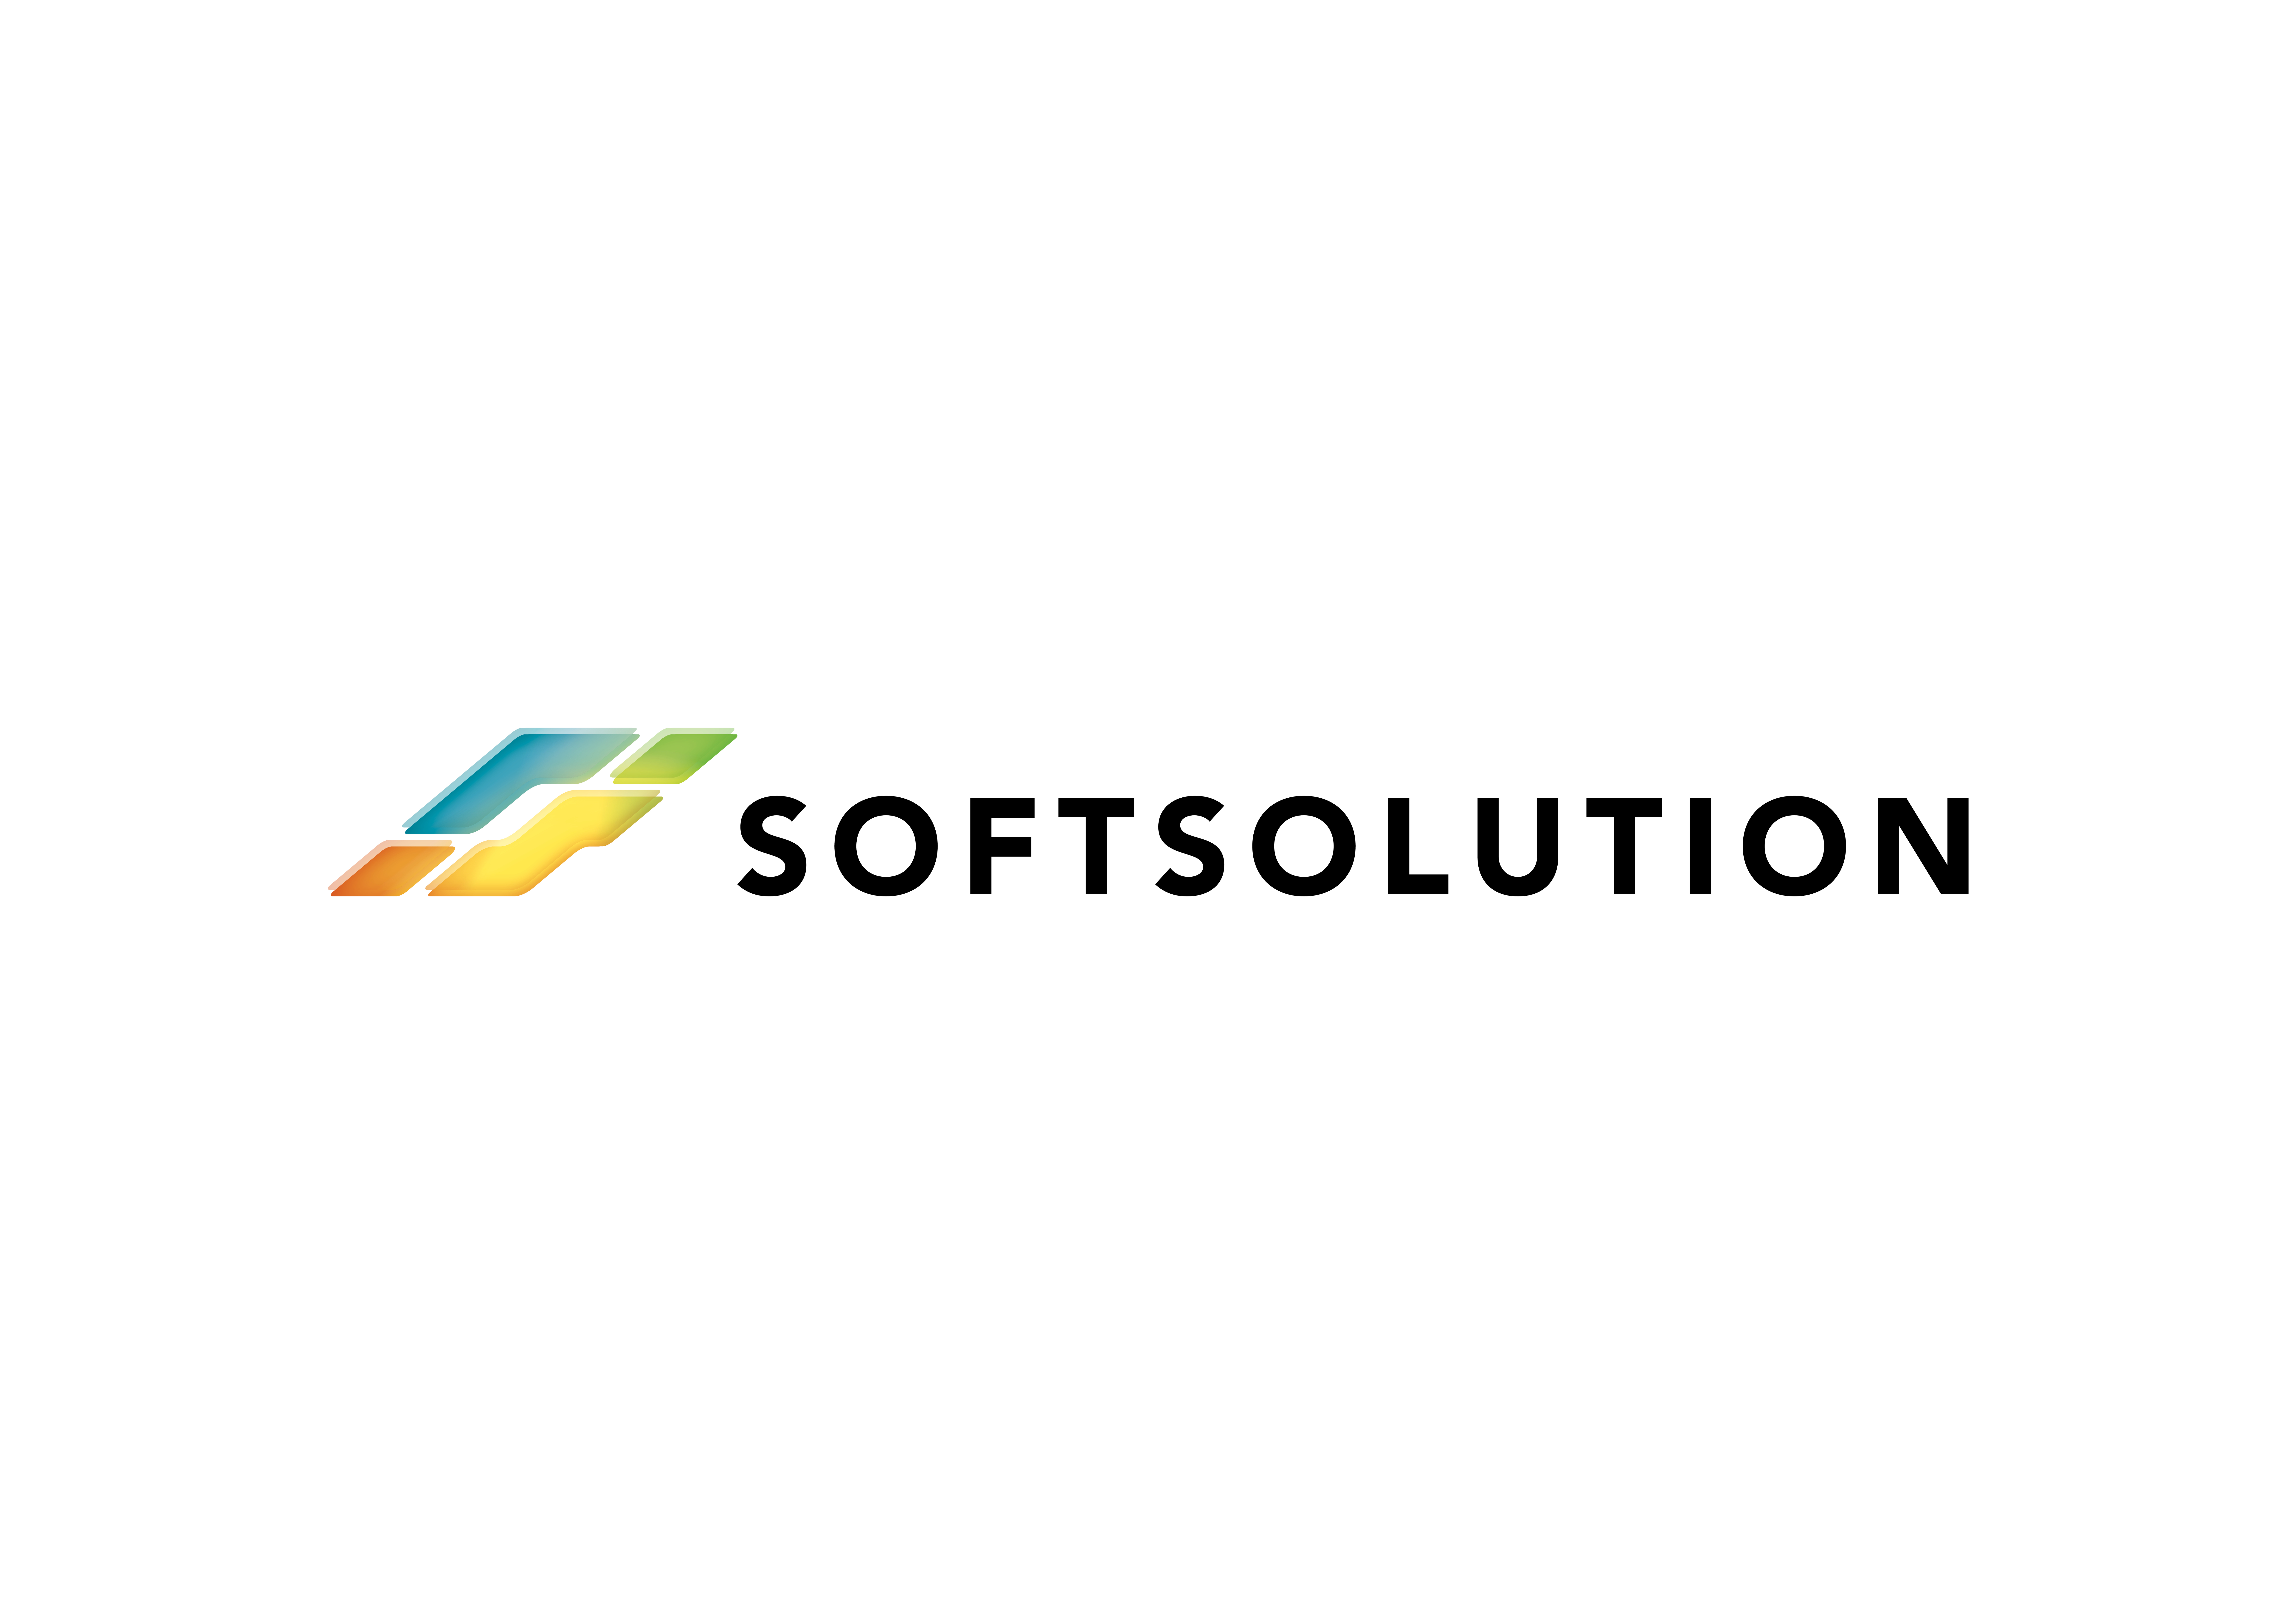 Softsolution